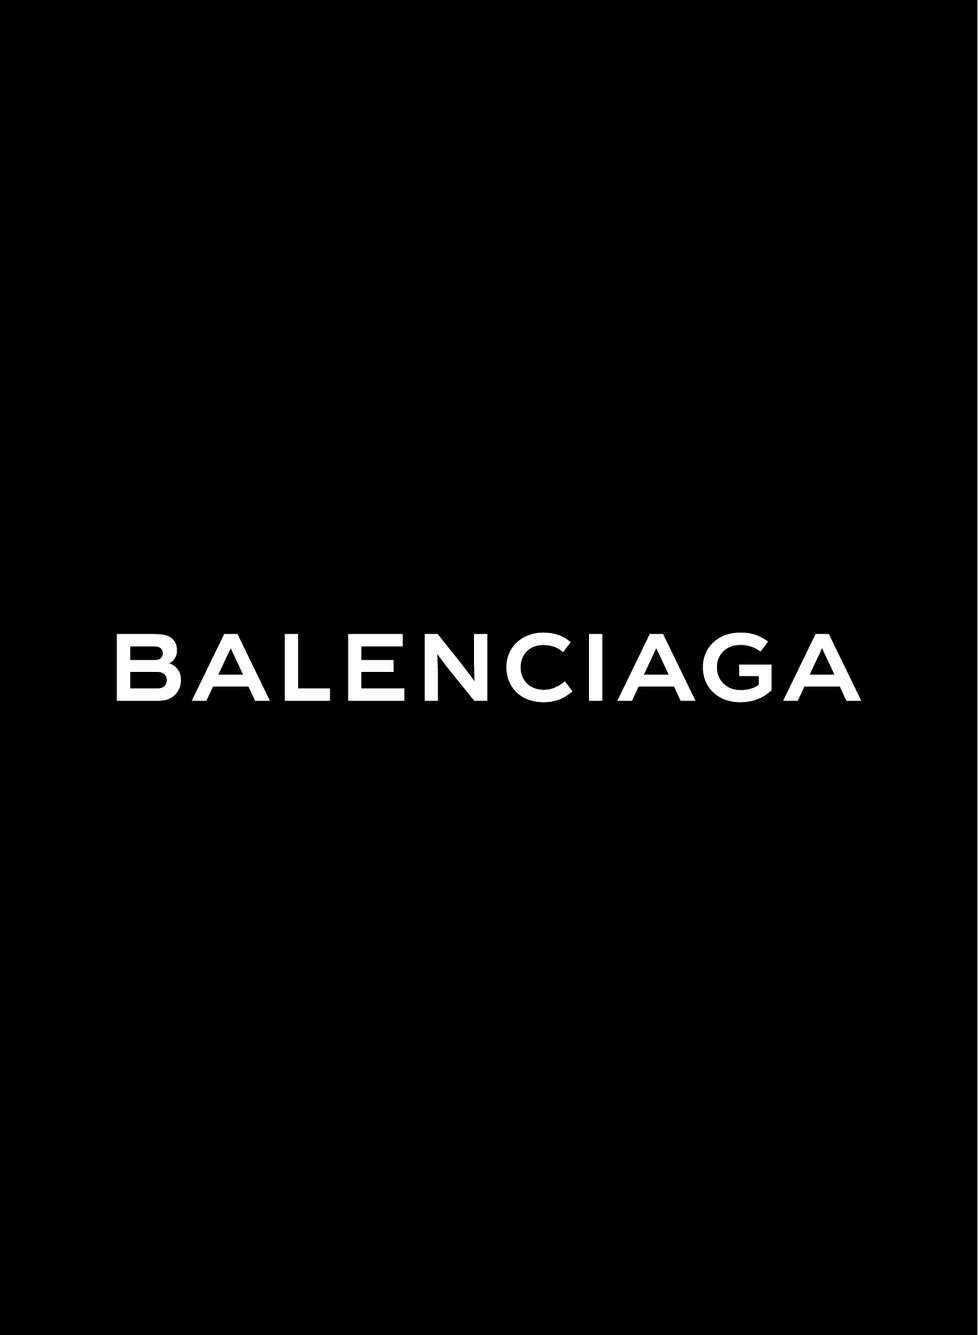 Balenciaga Va Lancer Une Business Unit Dediee Au Metaverse